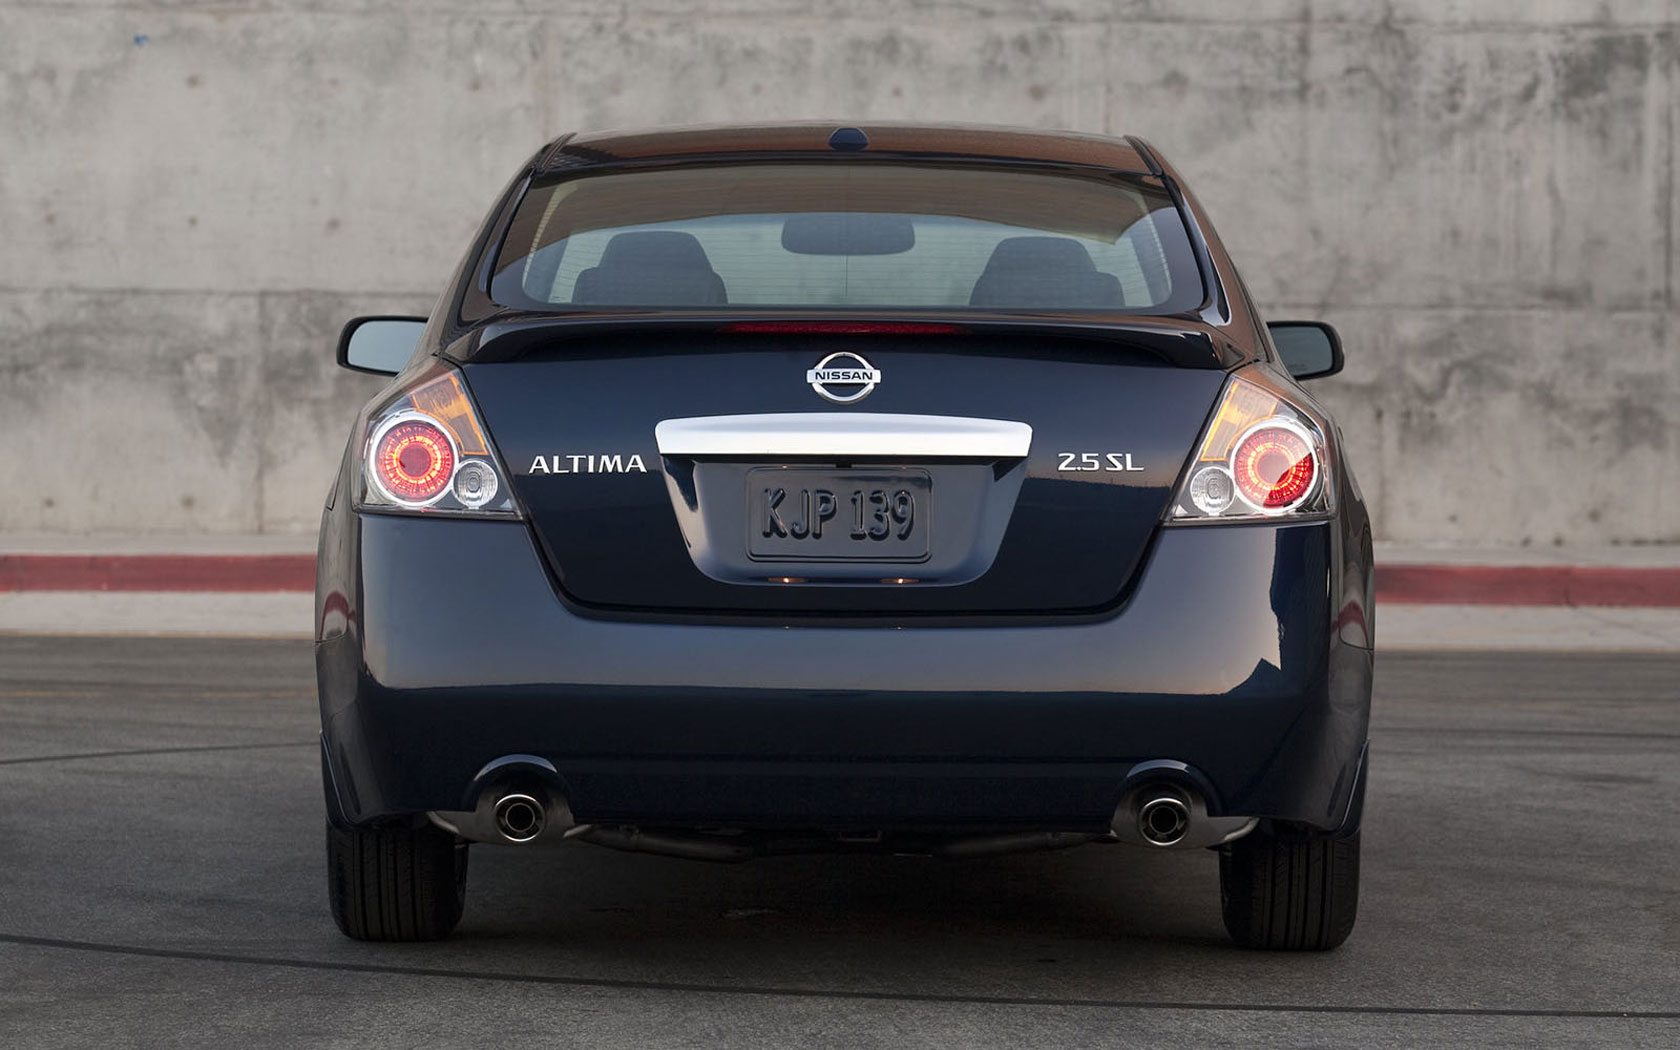  Nissan Altima (2010-2012)